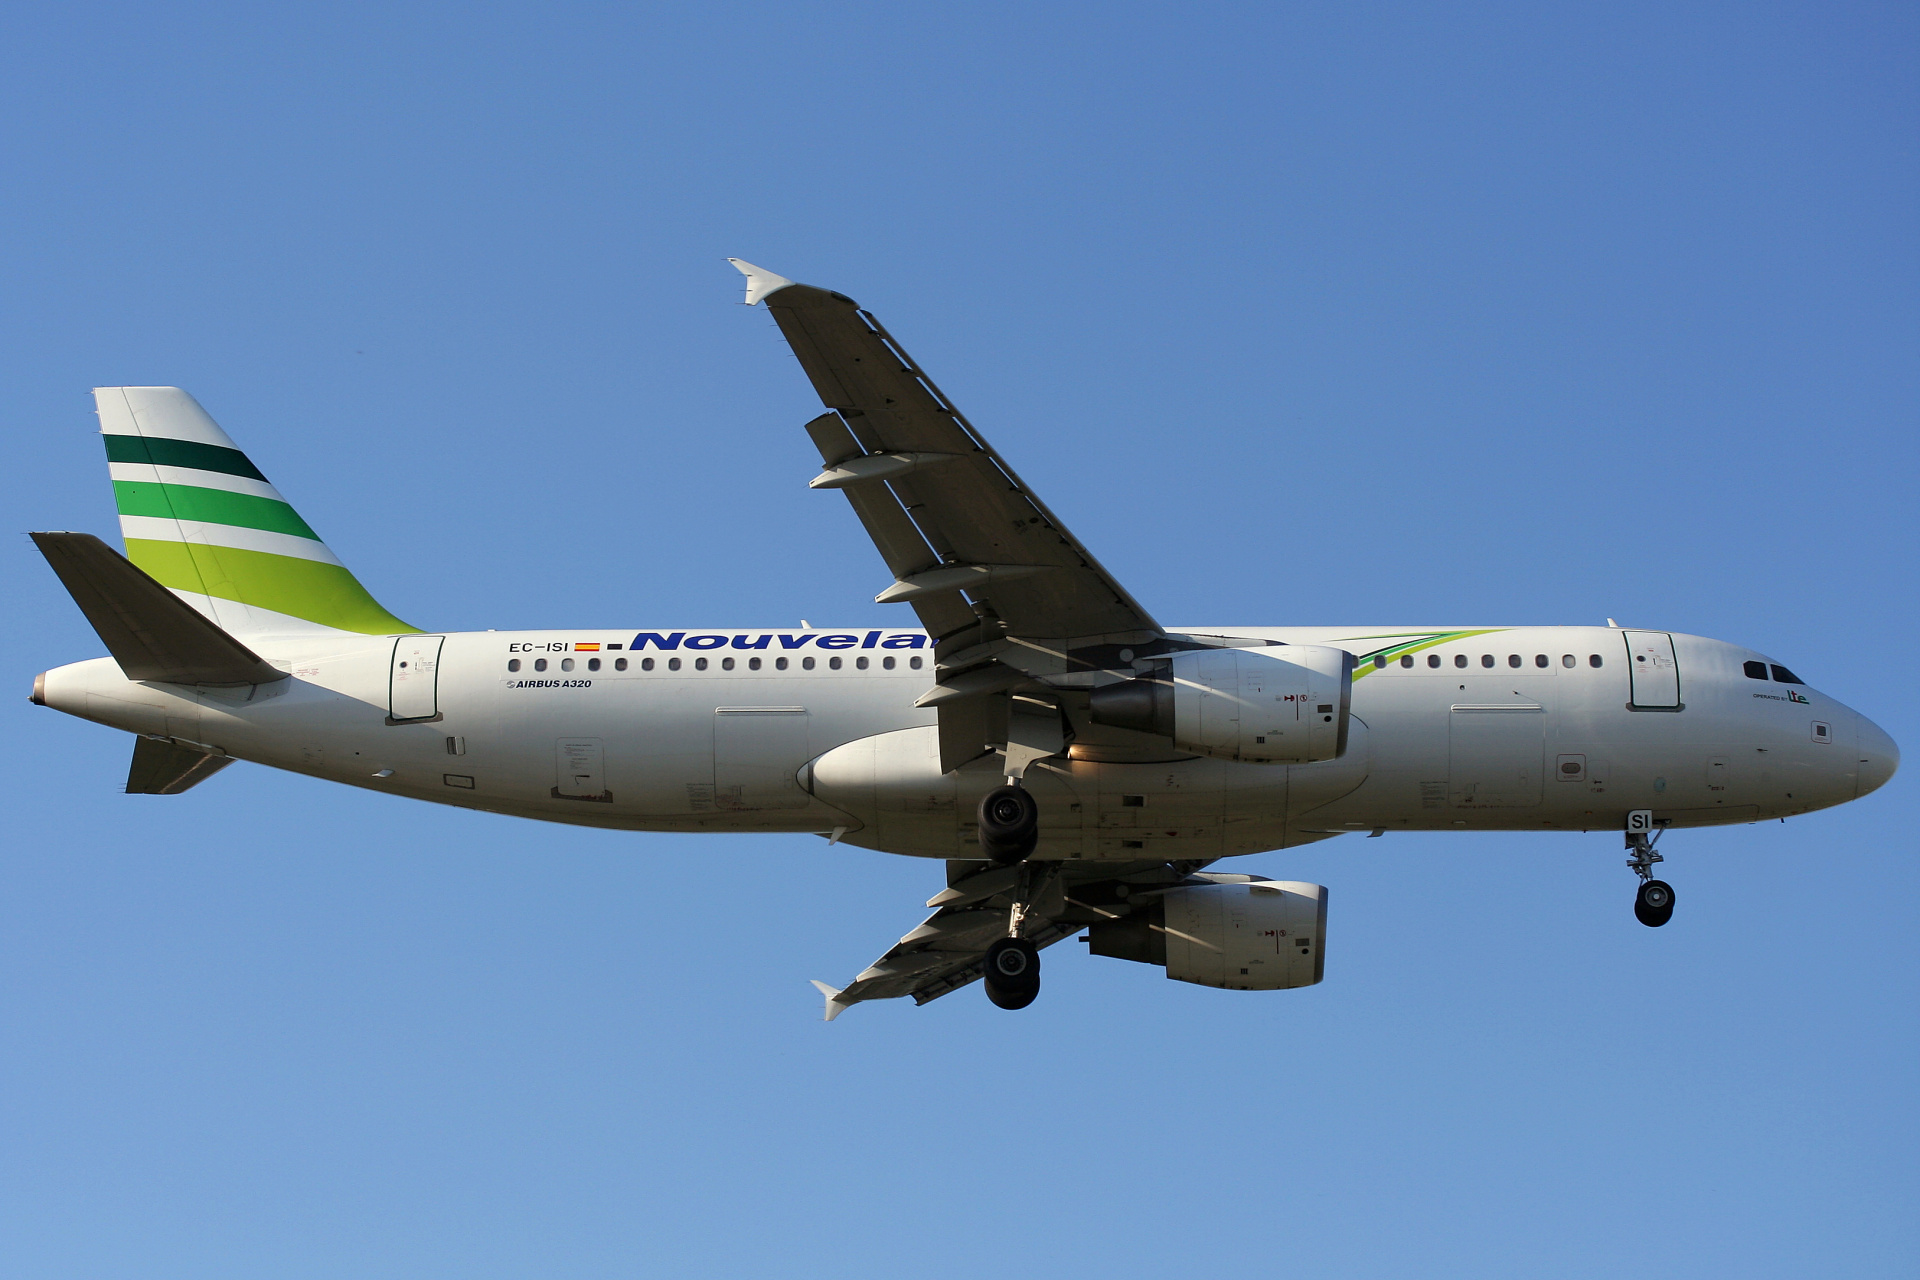 EC-ISI (LTE International Airways) (Aircraft » EPWA Spotting » Airbus A320-200 » Nouvelair)